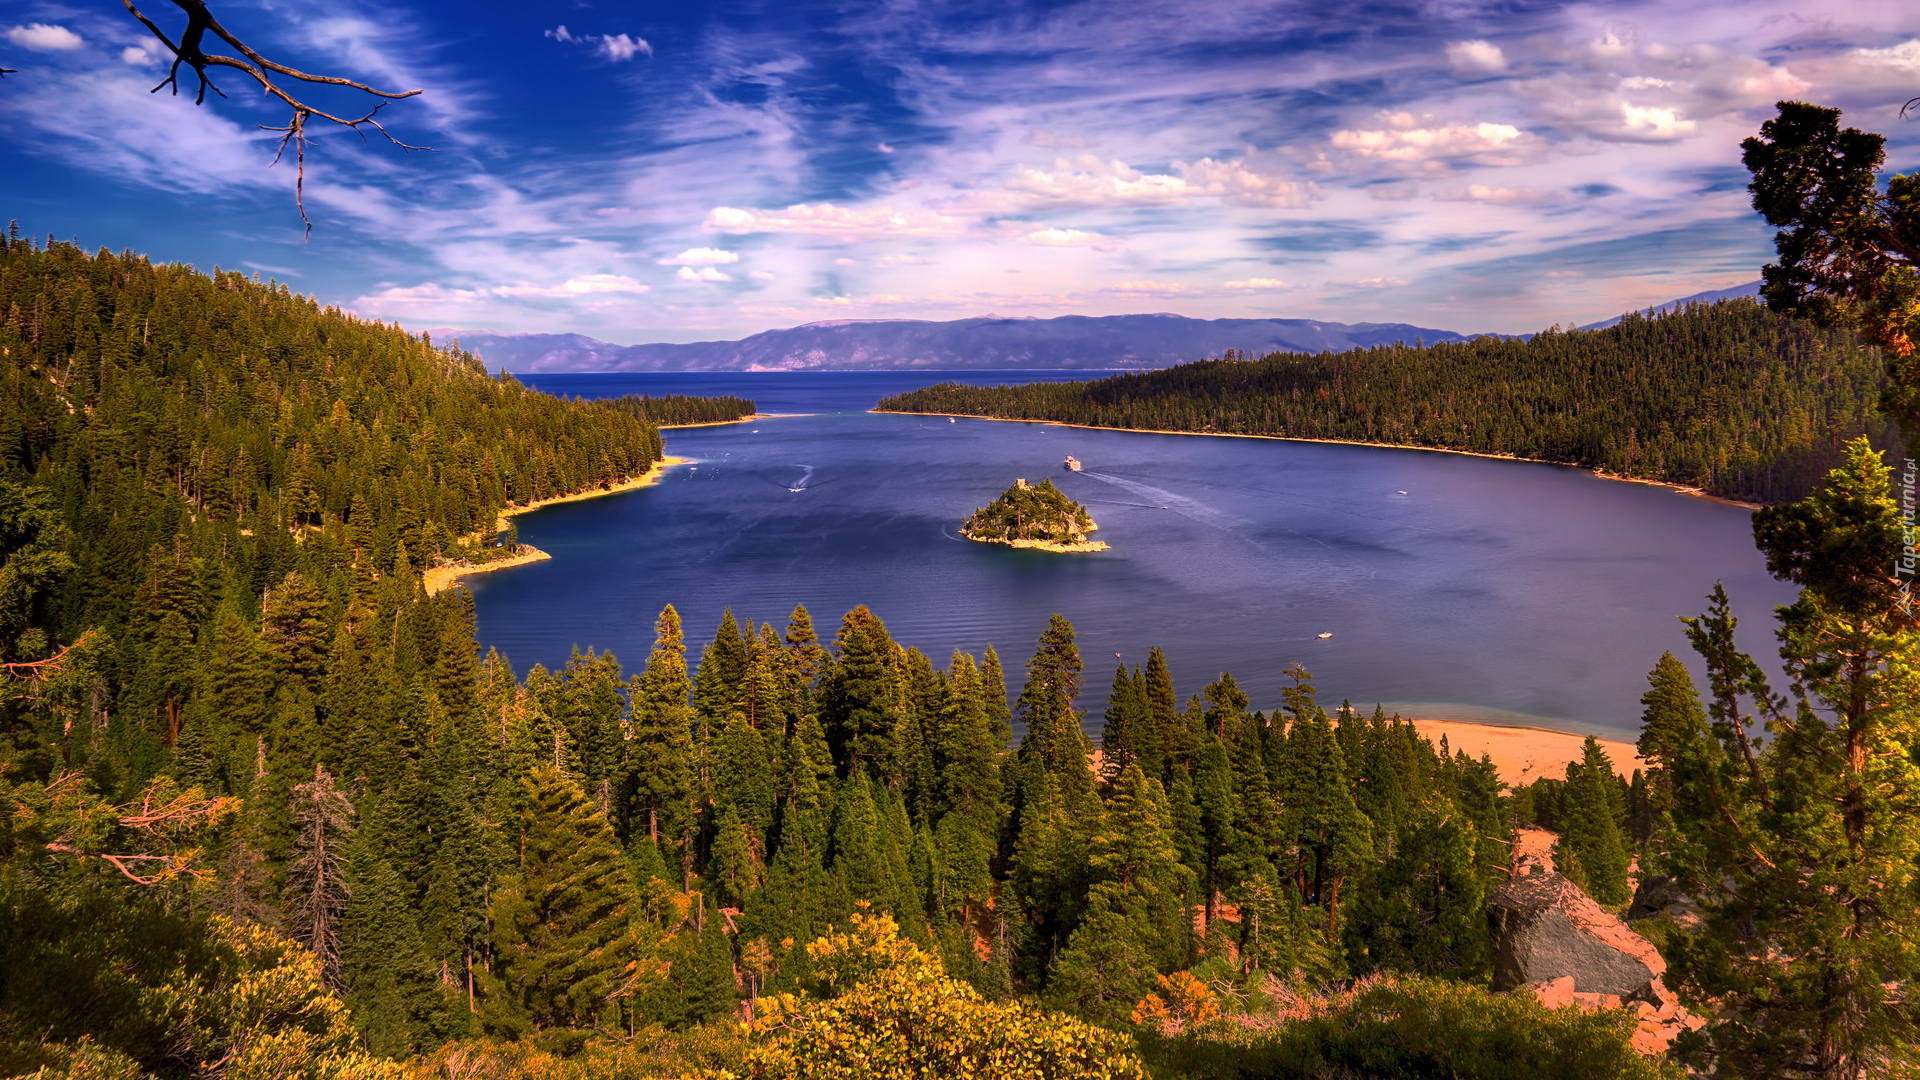 Jezioro Tahoe, Wyspa Fannette, Park Emerald Bay, Lasy, Drzewa, Kalifornia, Stany Zjednoczone